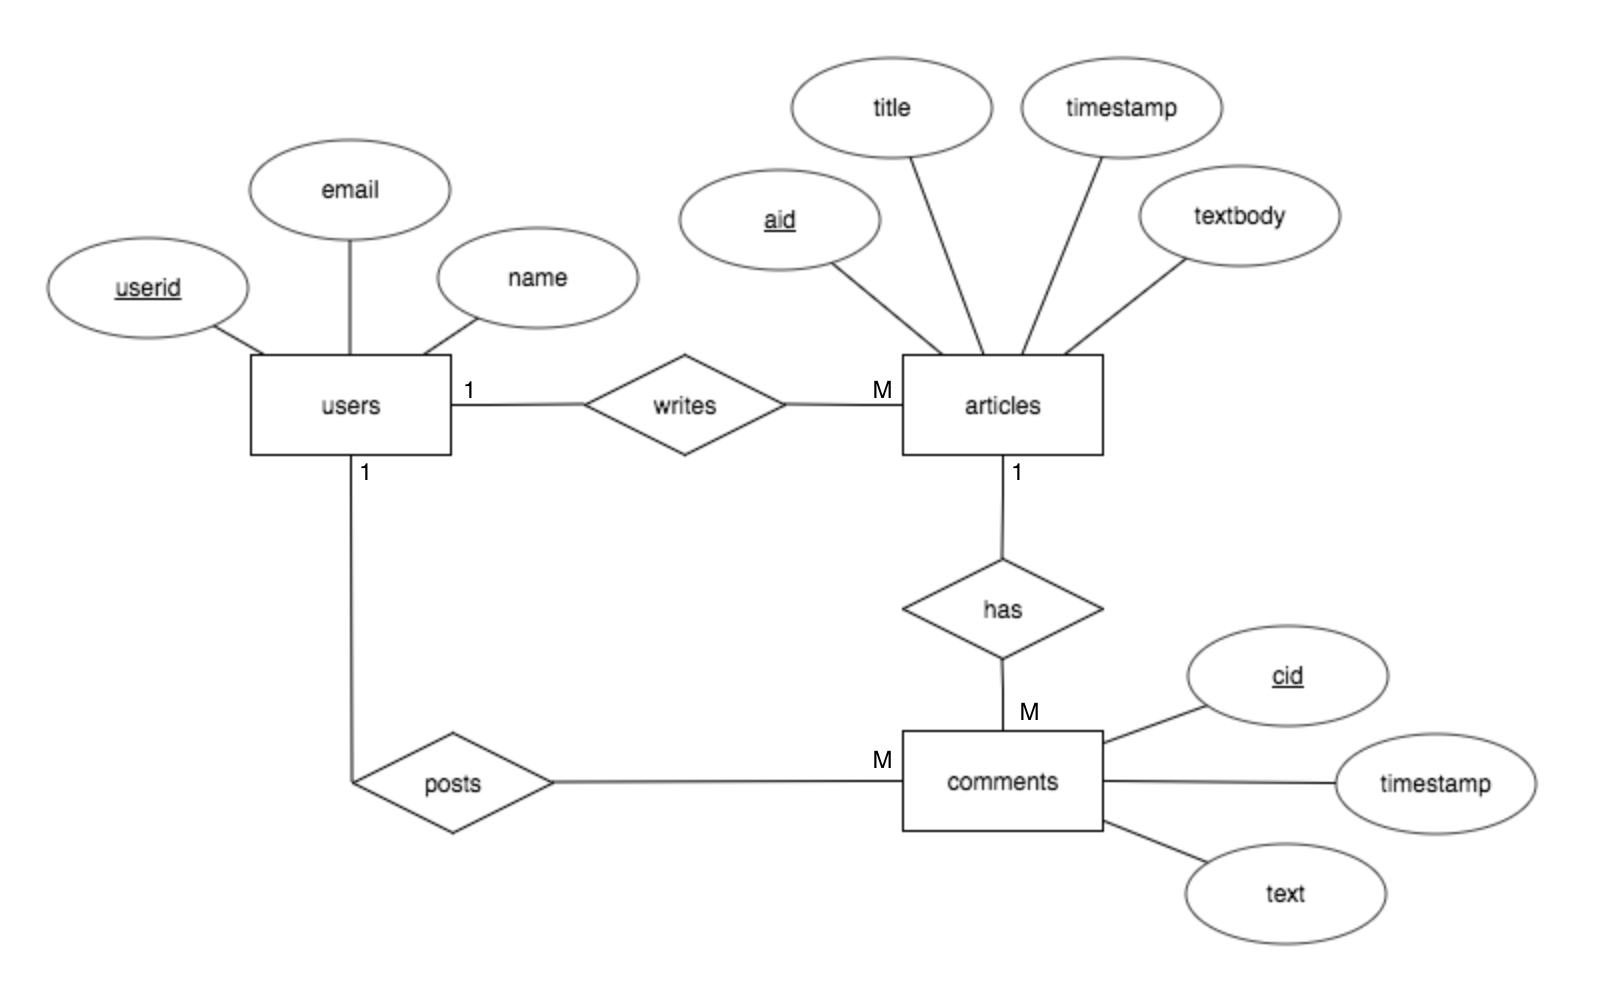 A Quick Look At Entity Relationship Diagrams - David Tsai regarding Er Diagram Many To Many